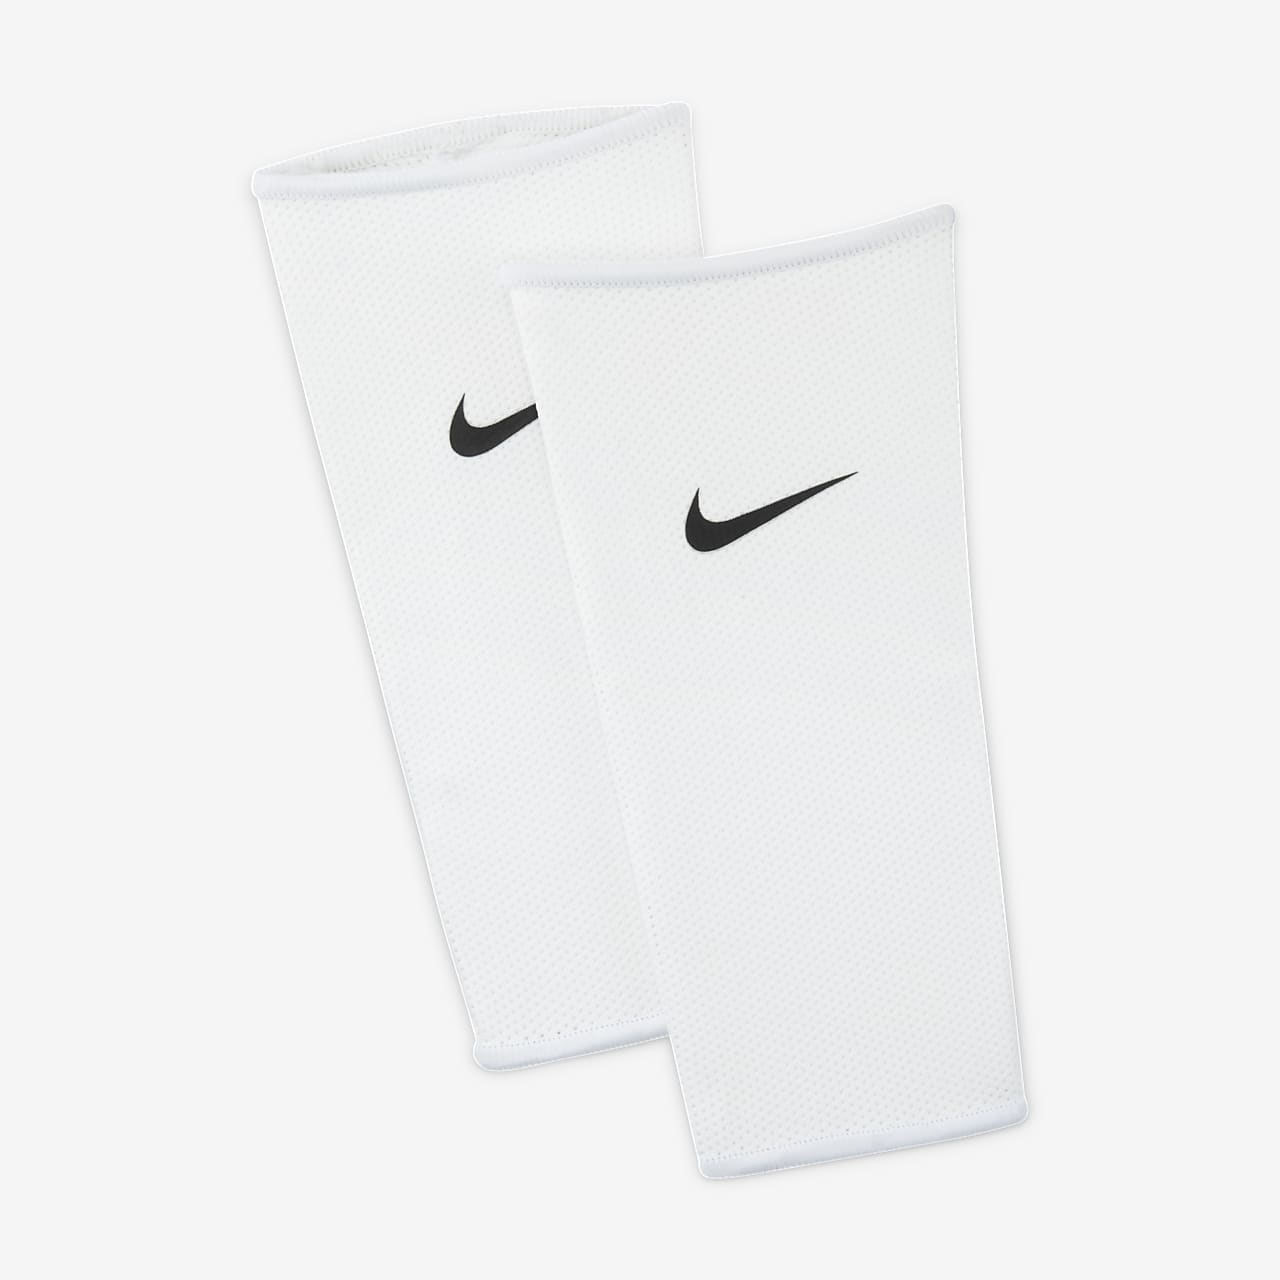 Nike Guard Lock Soccer Guard Sleeves (1 